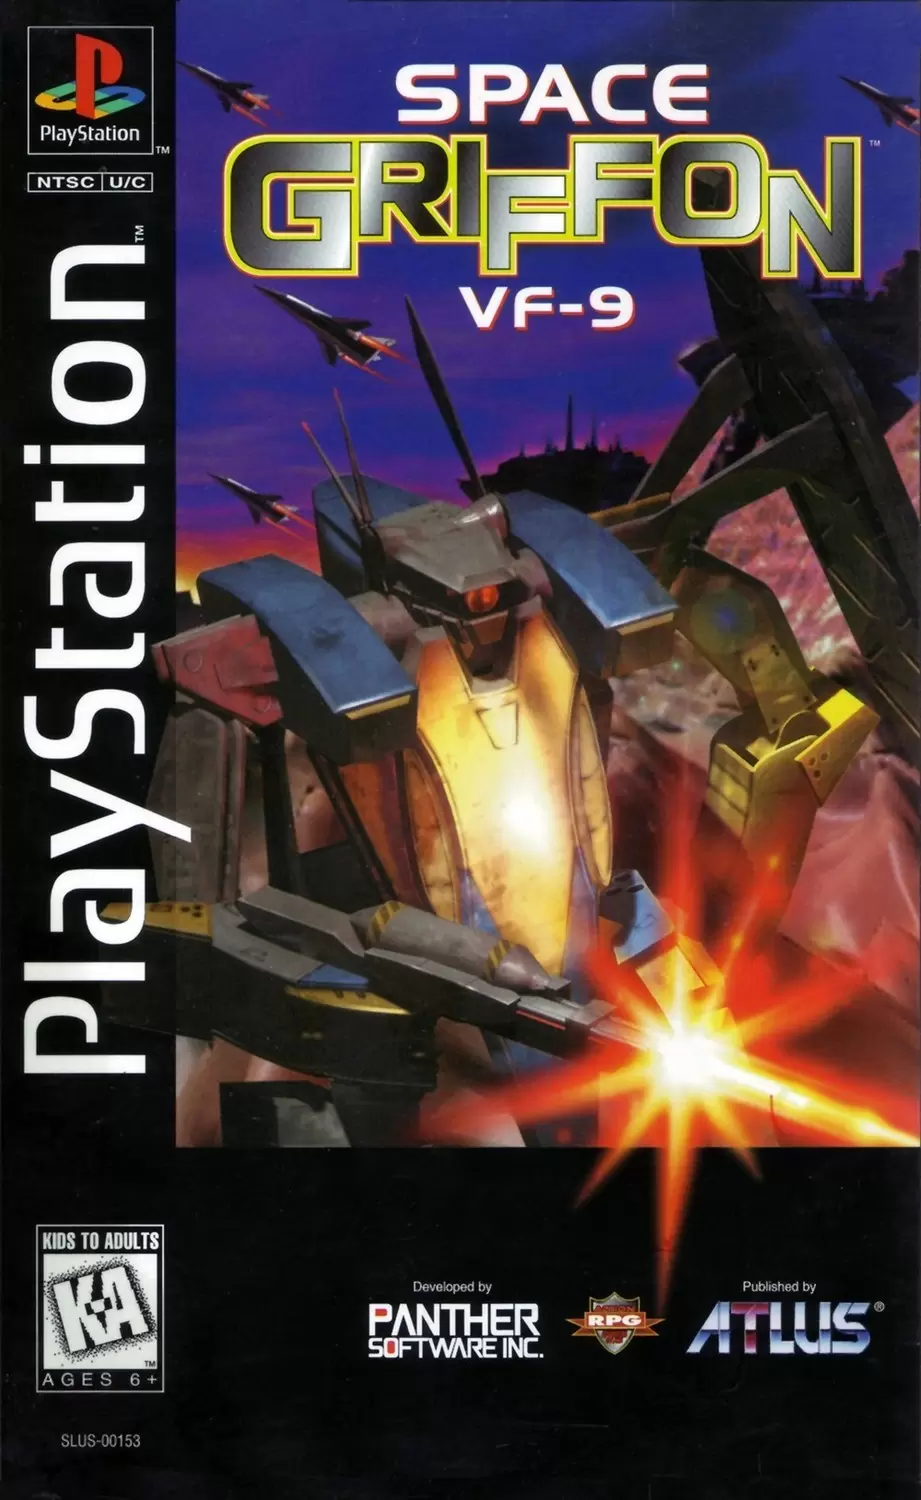 Playstation games - Space Griffon VF-9